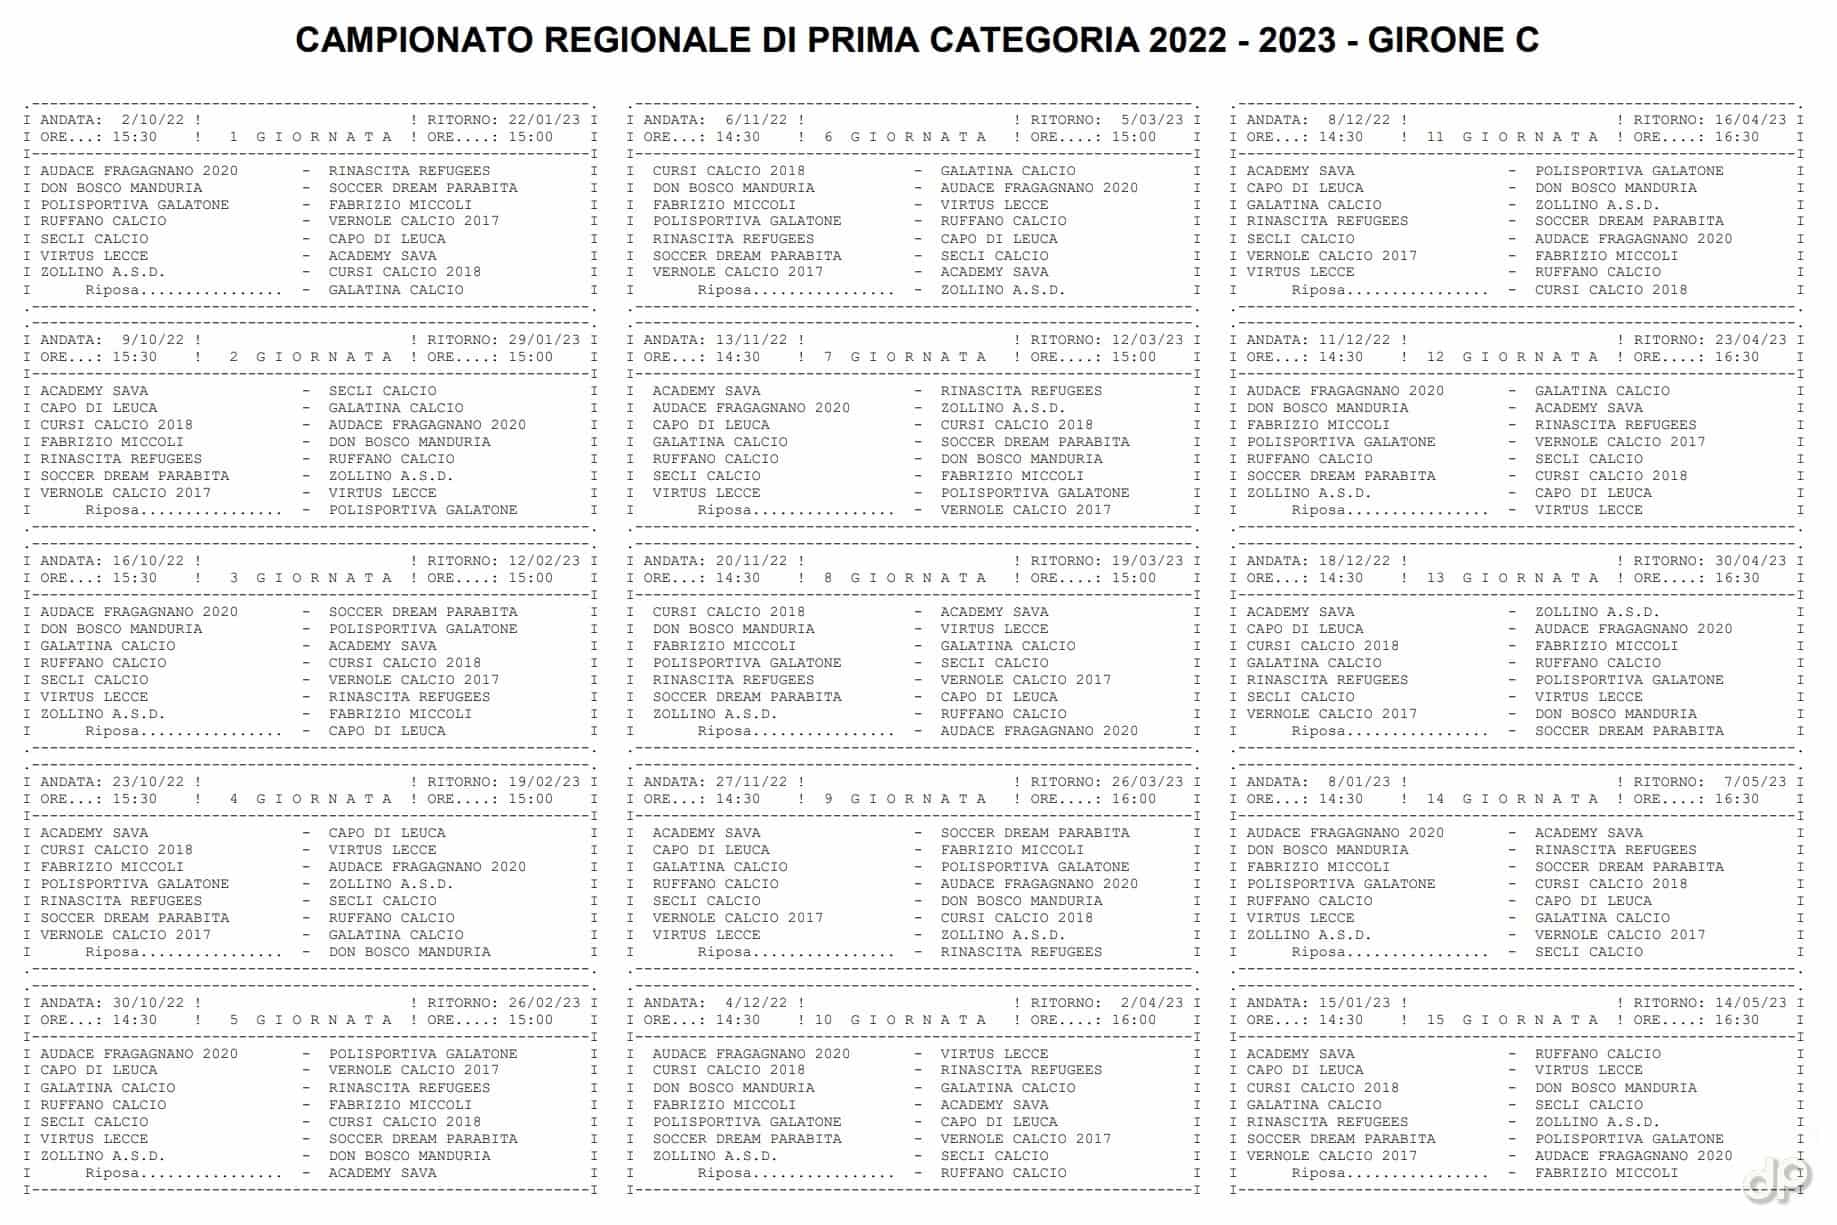 Calendario Prima Categoria pugliese girone C 2022-23